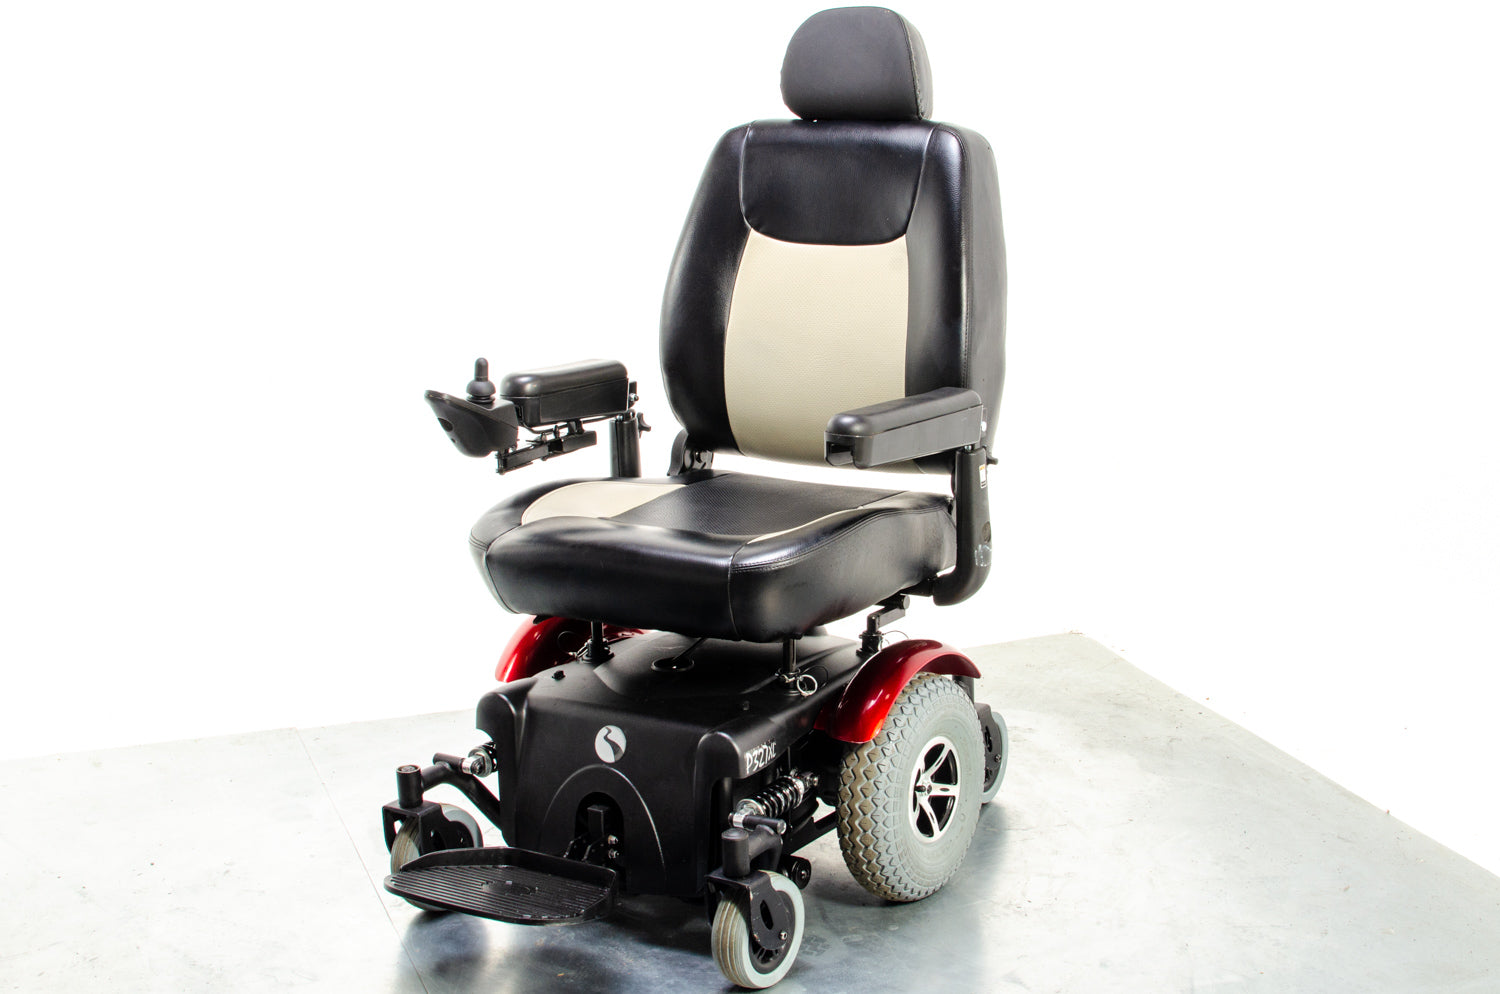 Rascal P327XL Used Electric Wheelchair Powerchair Bariatric Heavy Duty Red